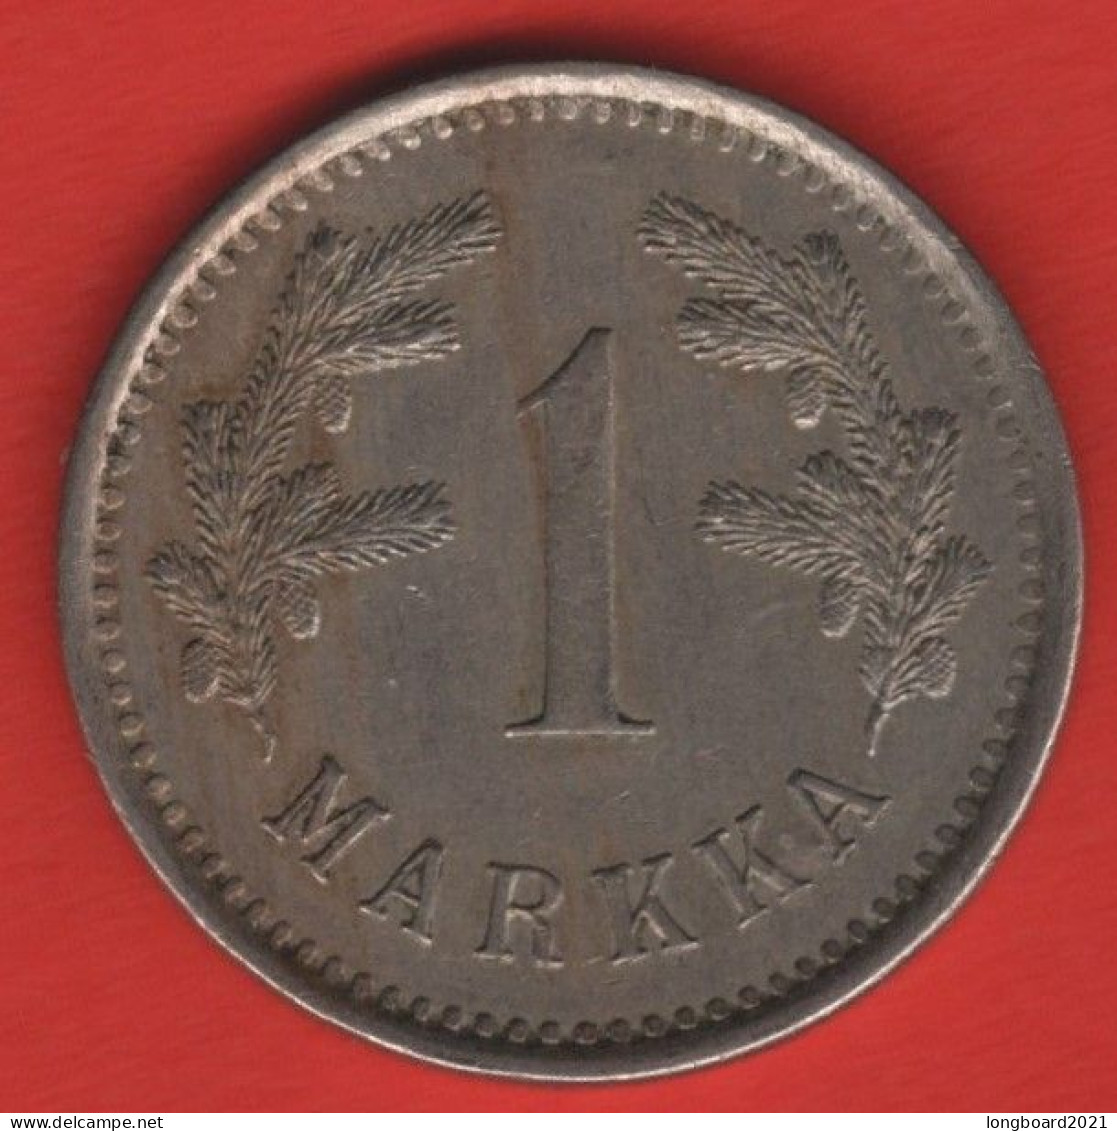 FINLAND - 1 MARKKA 1922 - Finland